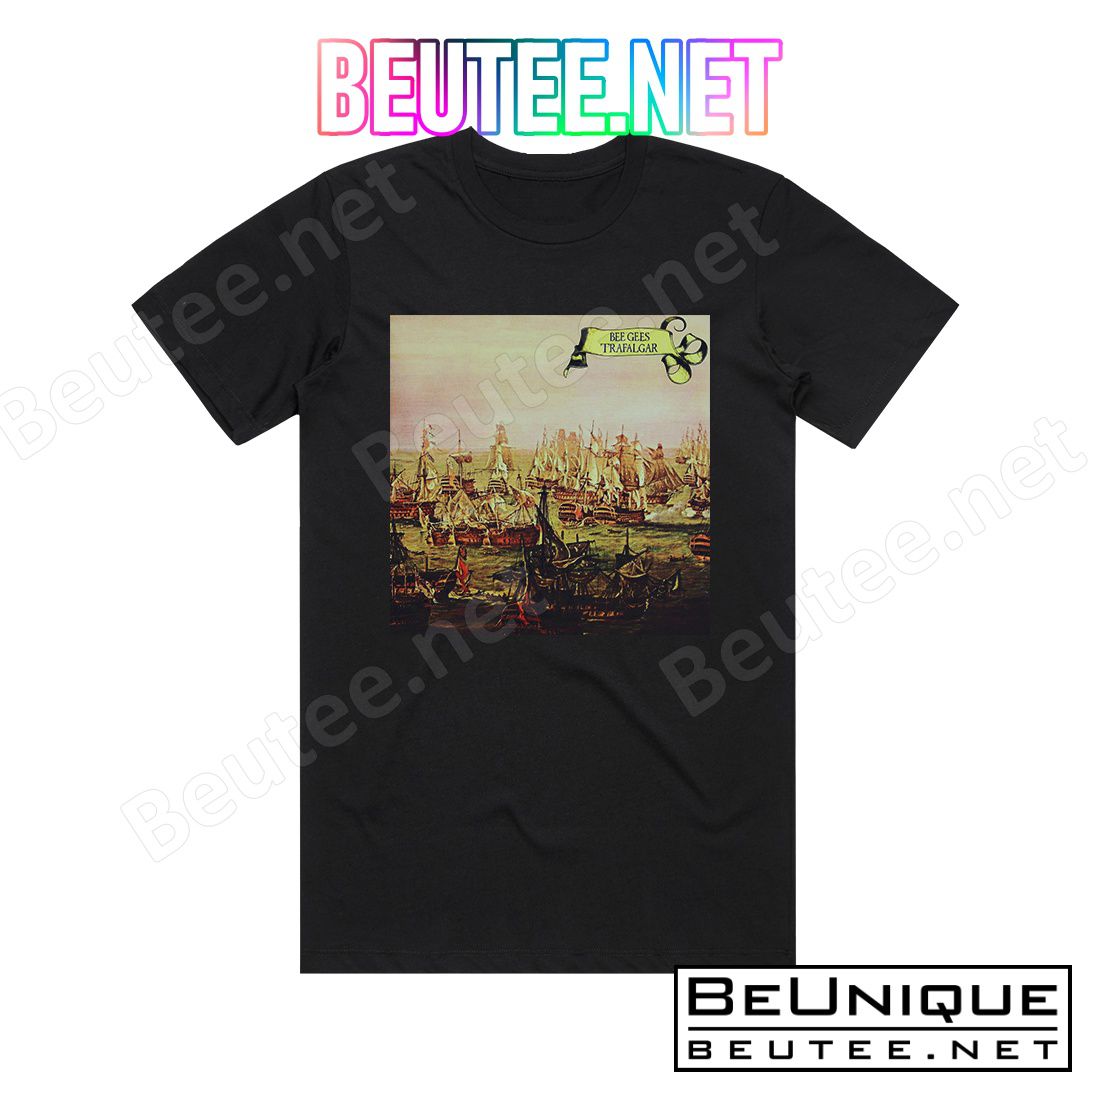 Bee Gees Trafalgar 2 Album Cover T-Shirt